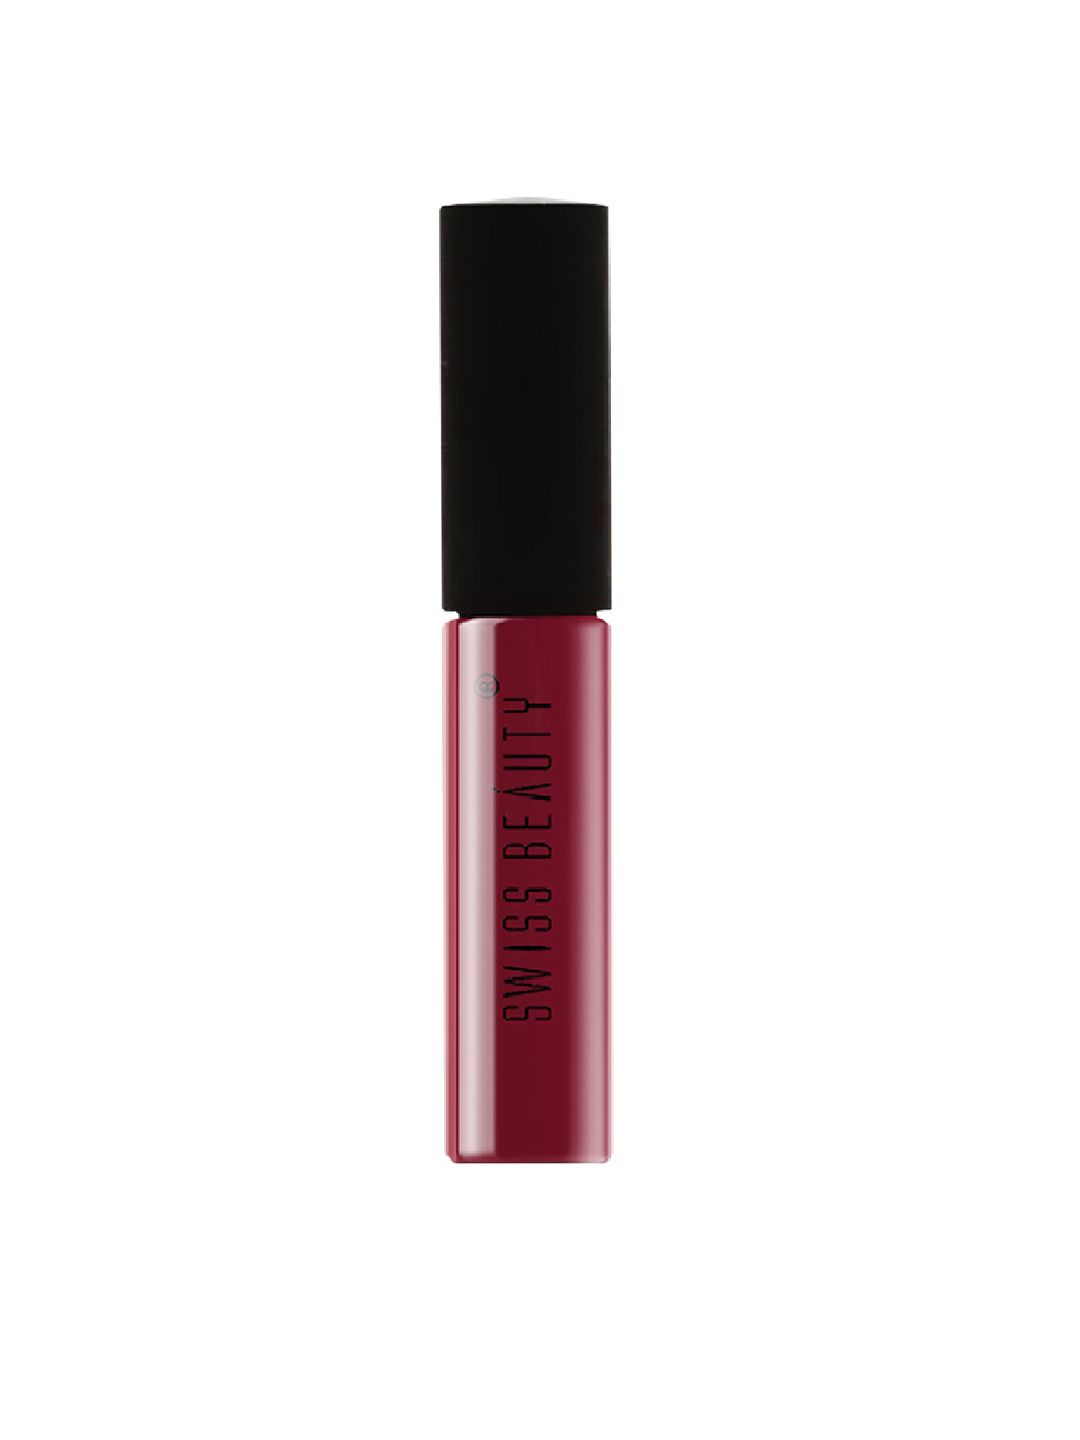 SWISS BEAUTY Soft Matte Liquid Lipstick - Wine Red 25 Price in India